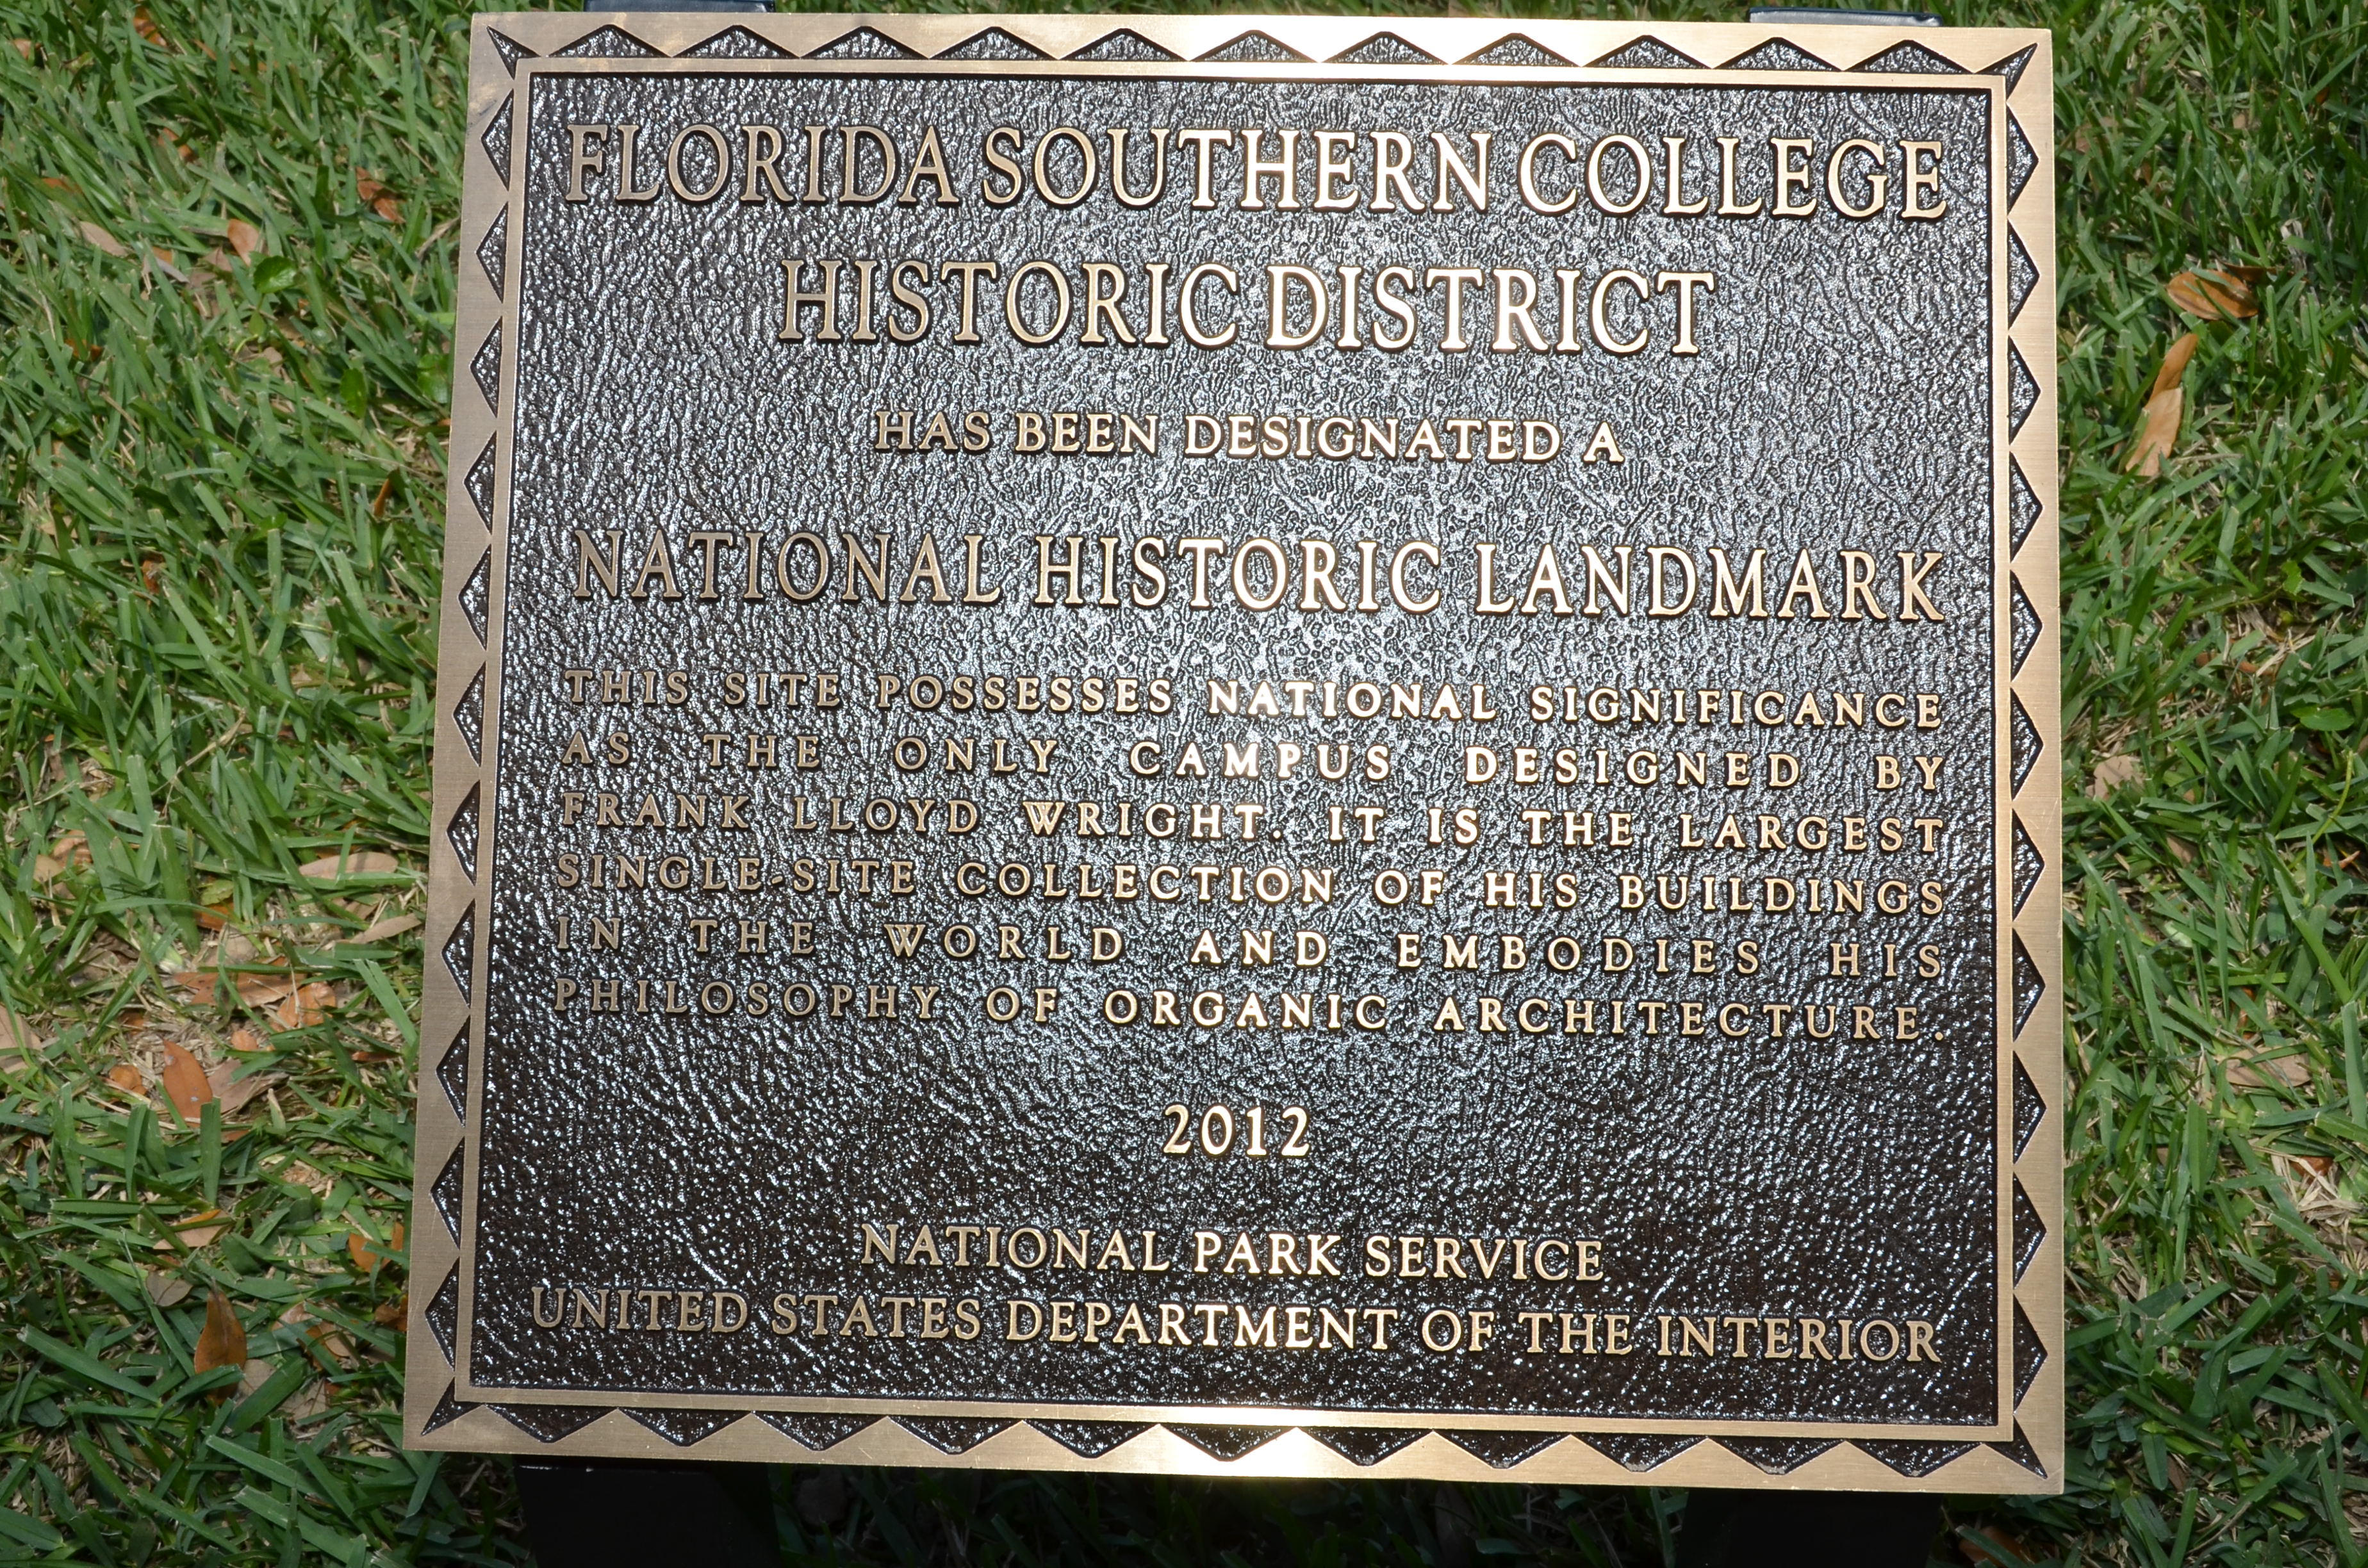 National Historical Landmark District